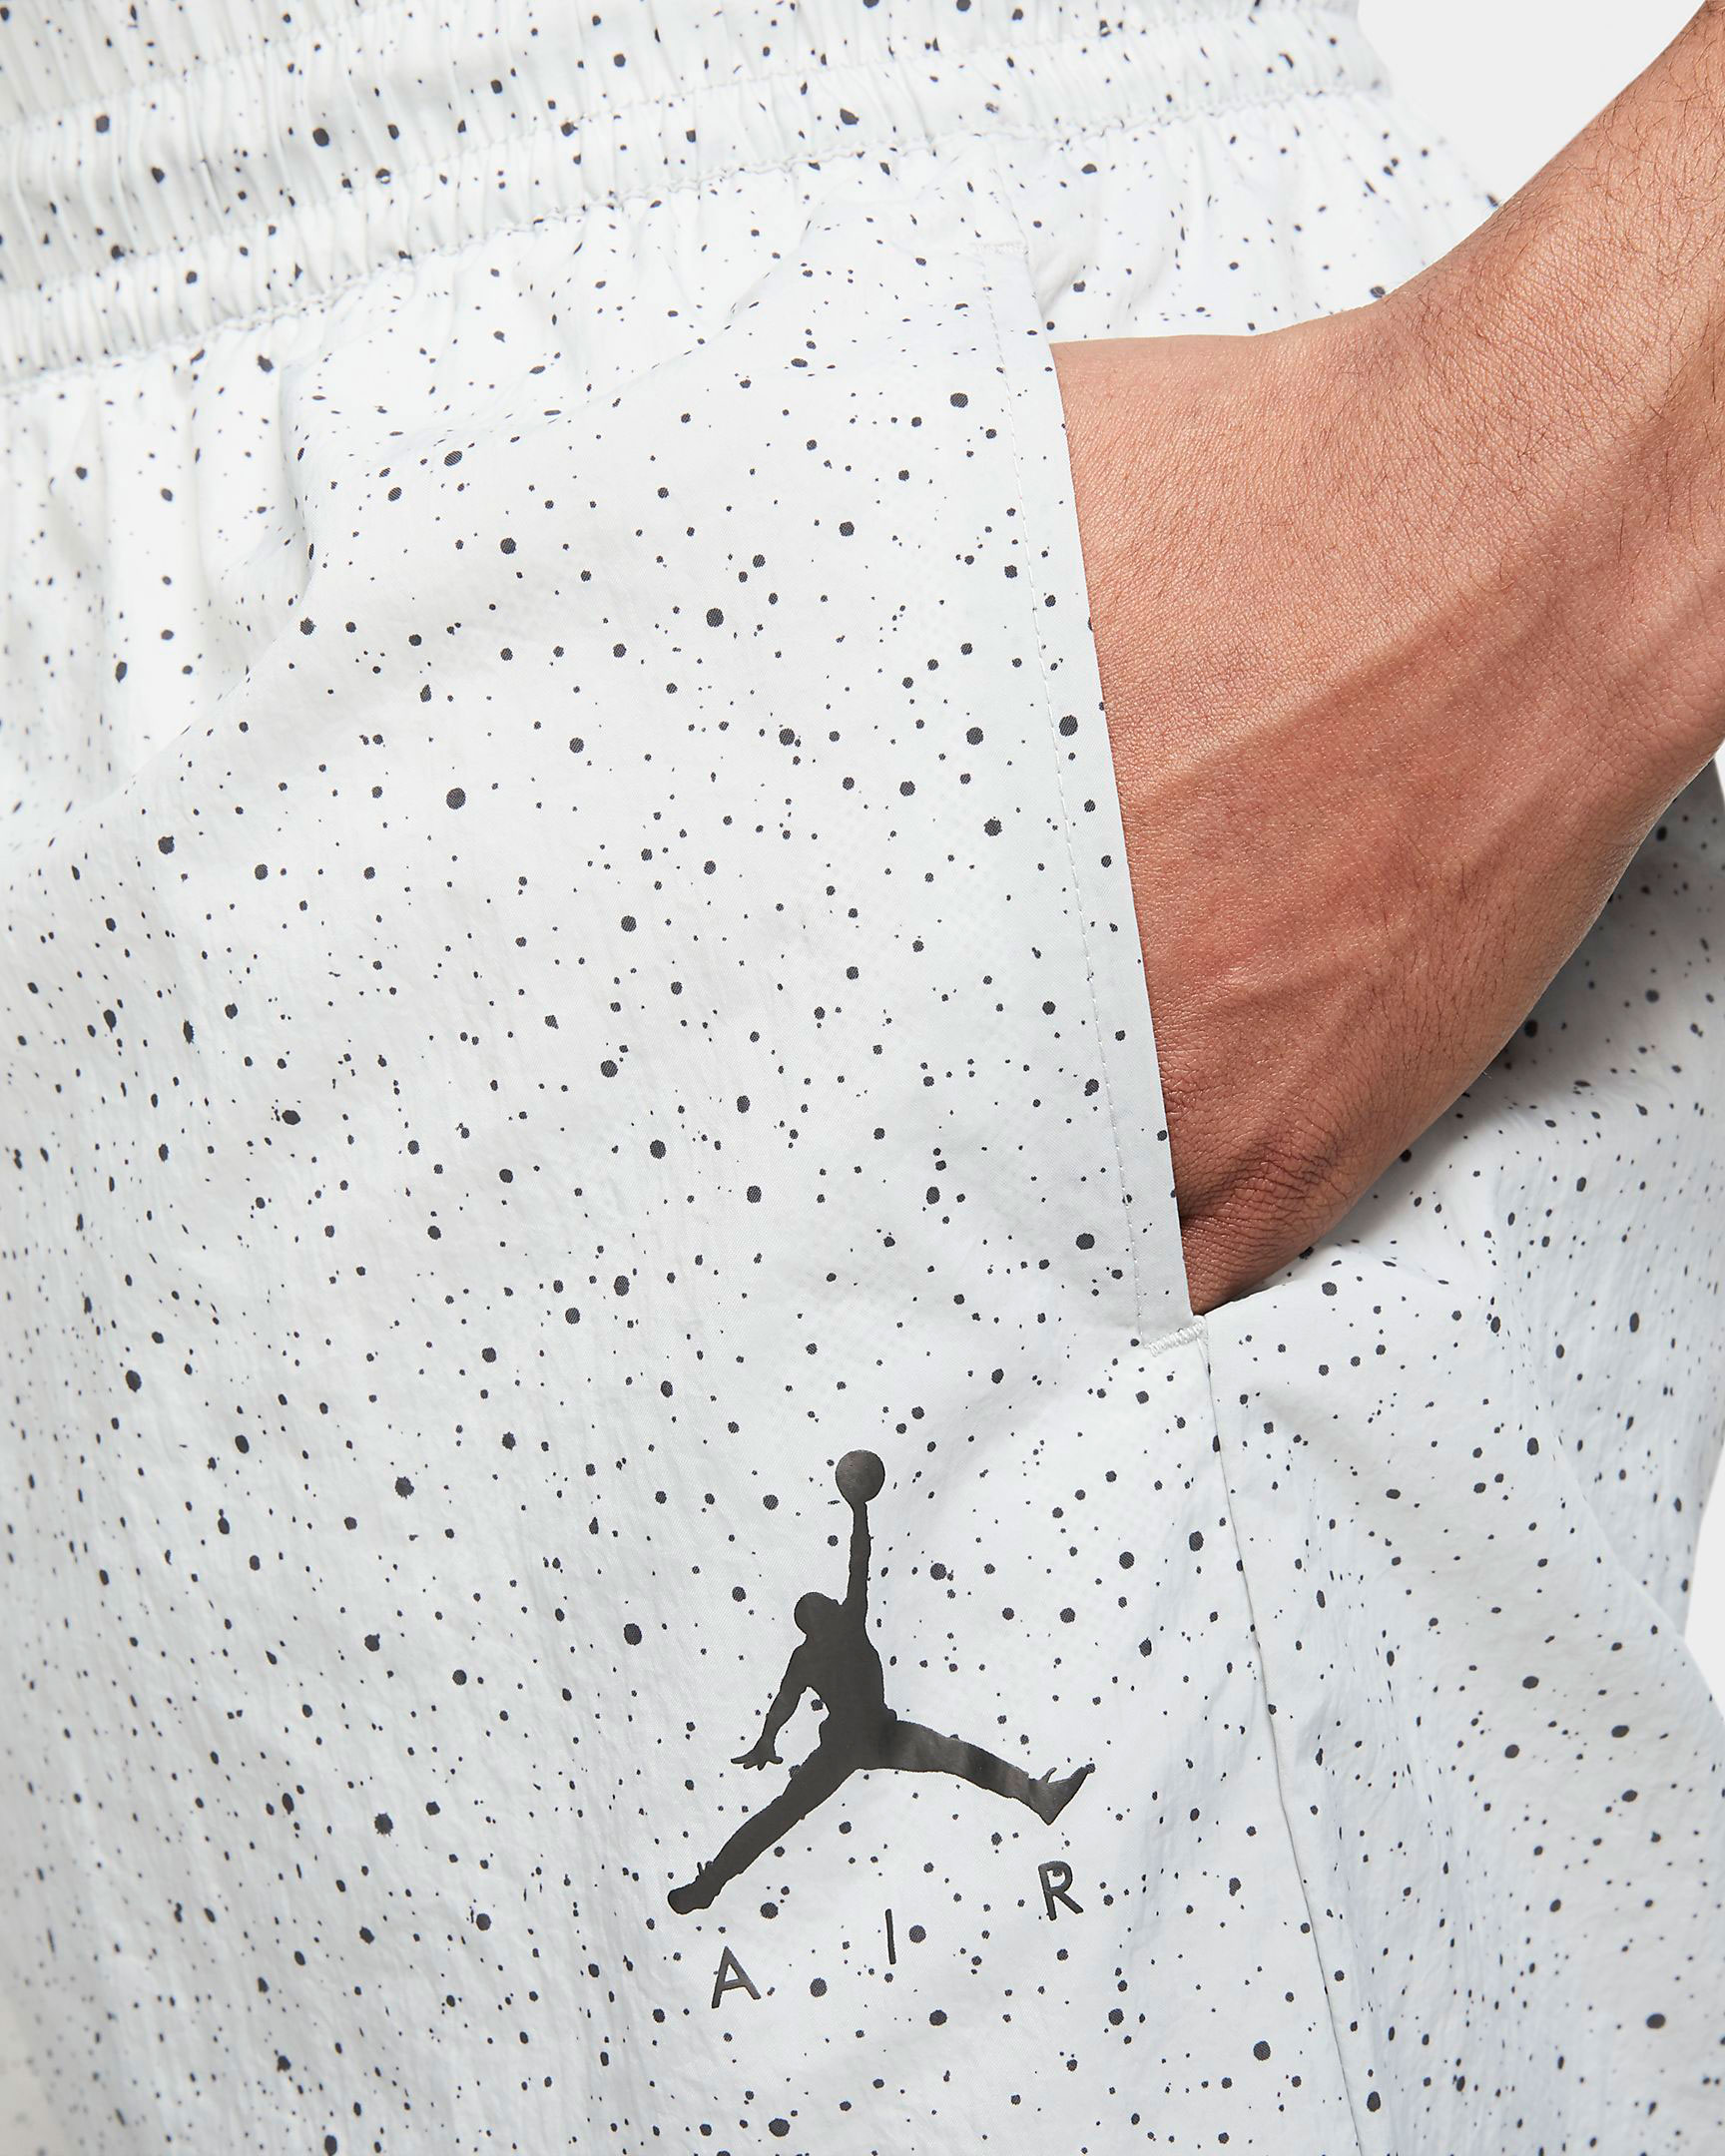 Jordan 11 Grey Snakeskin Bone Clothing Match | SneakerFits.com